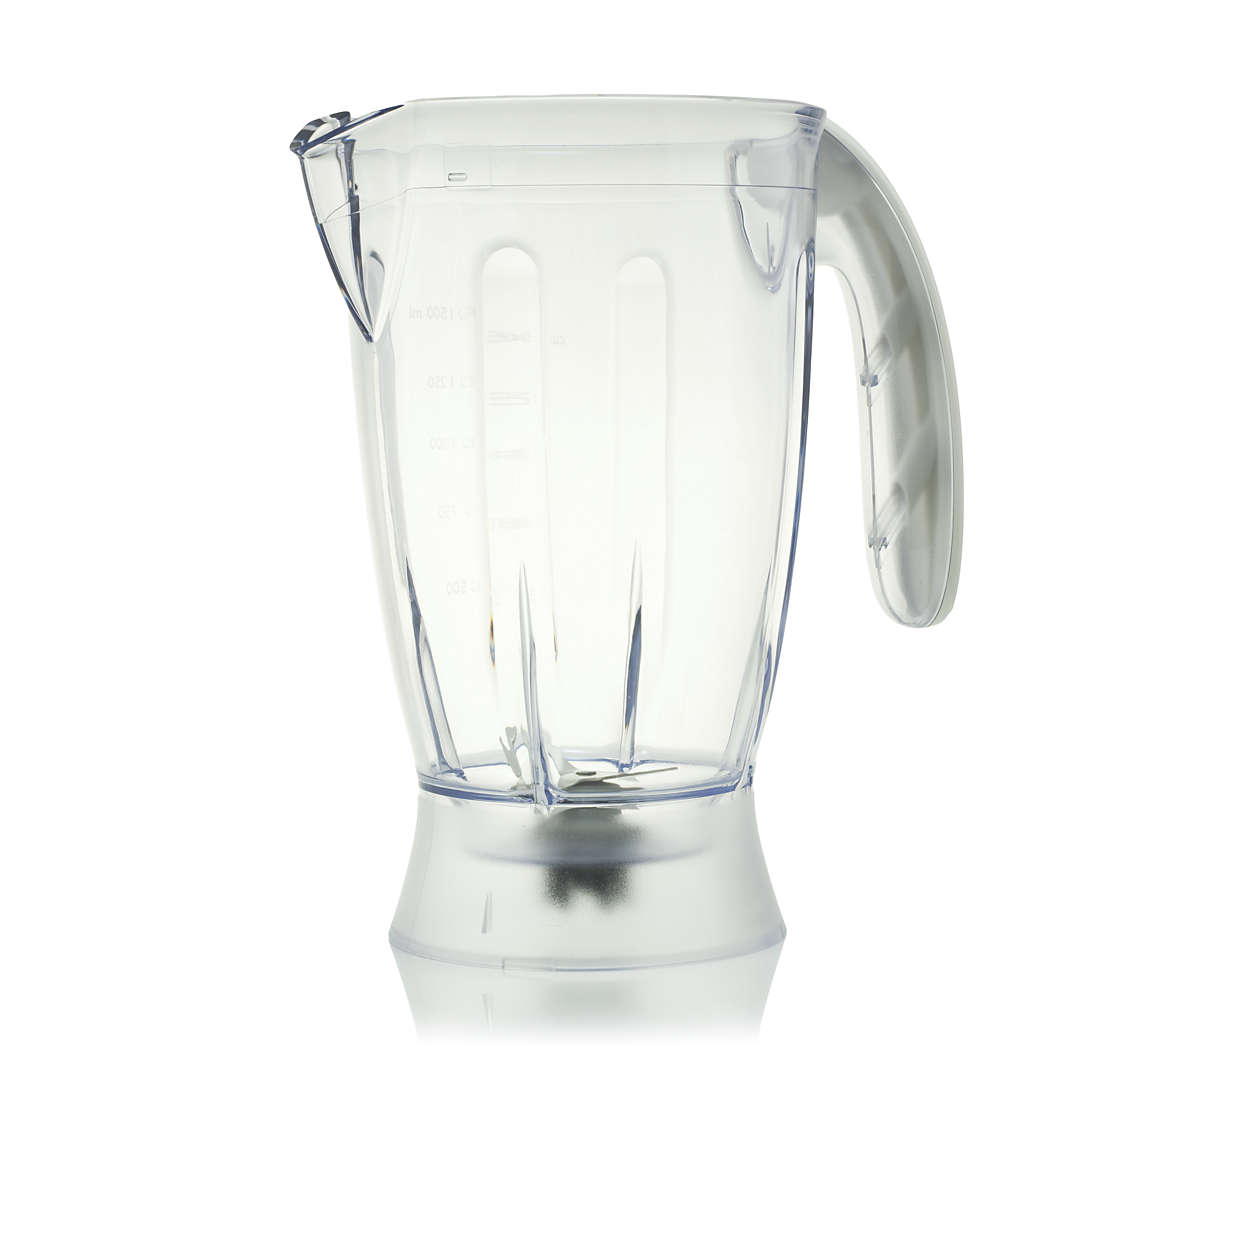 Blender beaker for your food processor